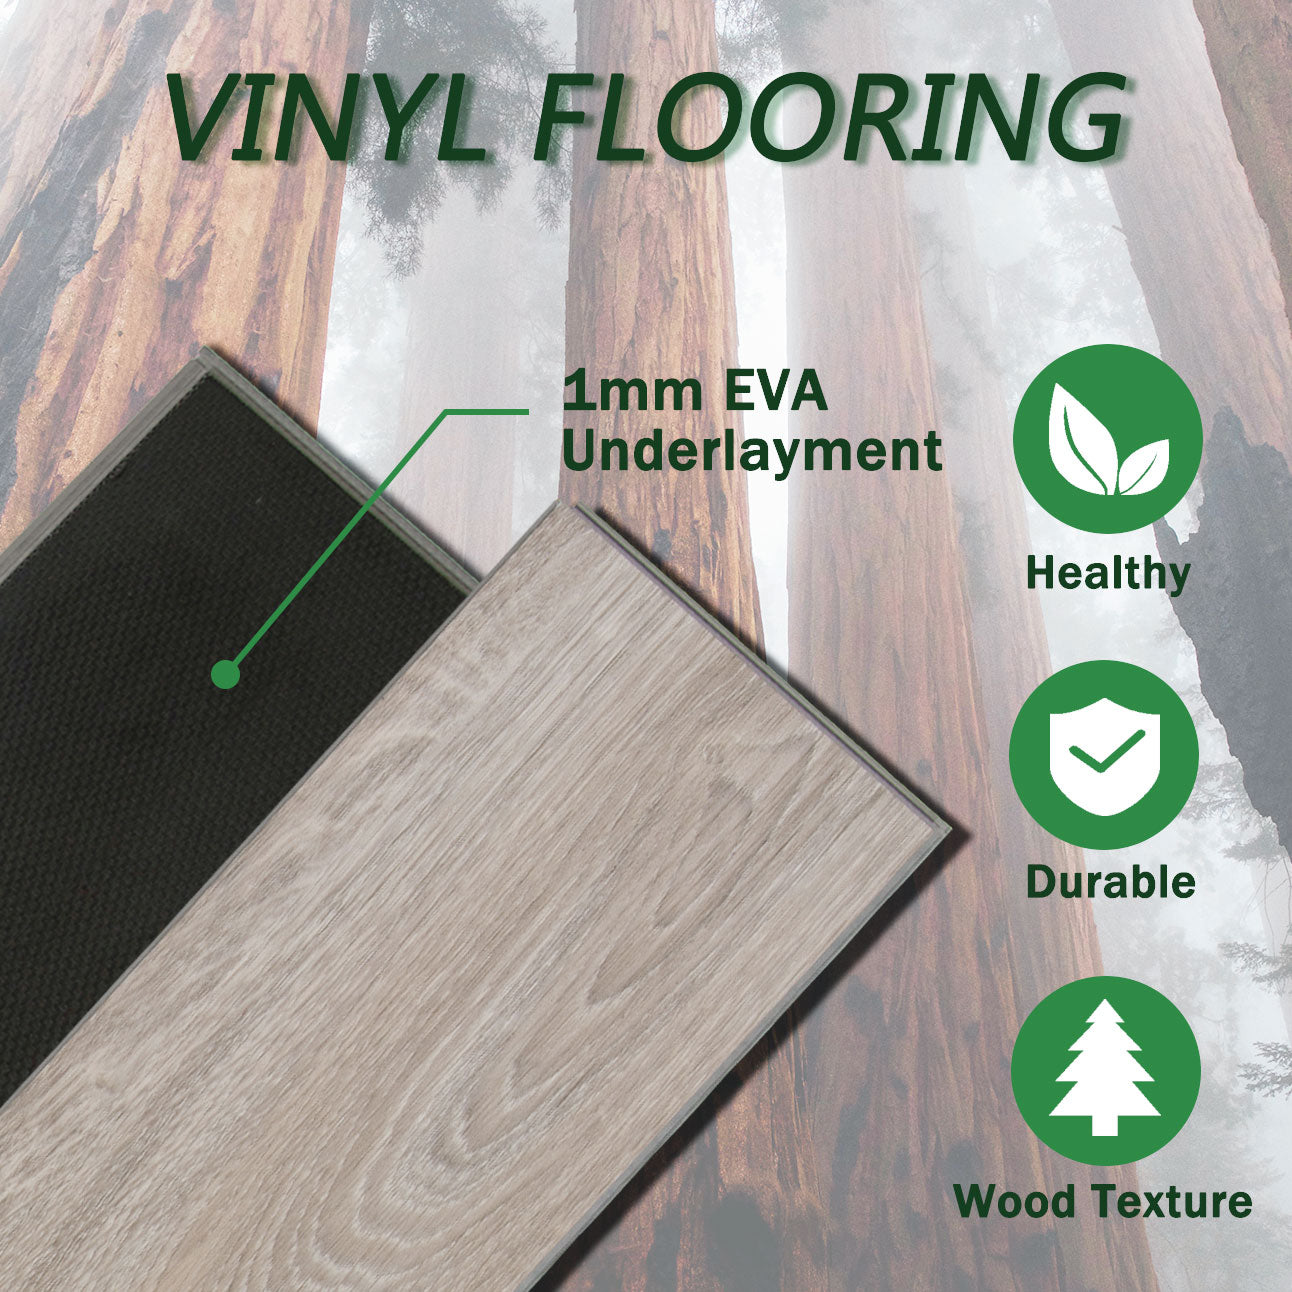 15.1 sq.ft Light Oak Rigid SPC Core Vinyl Plank Flooring 36x6 Inch